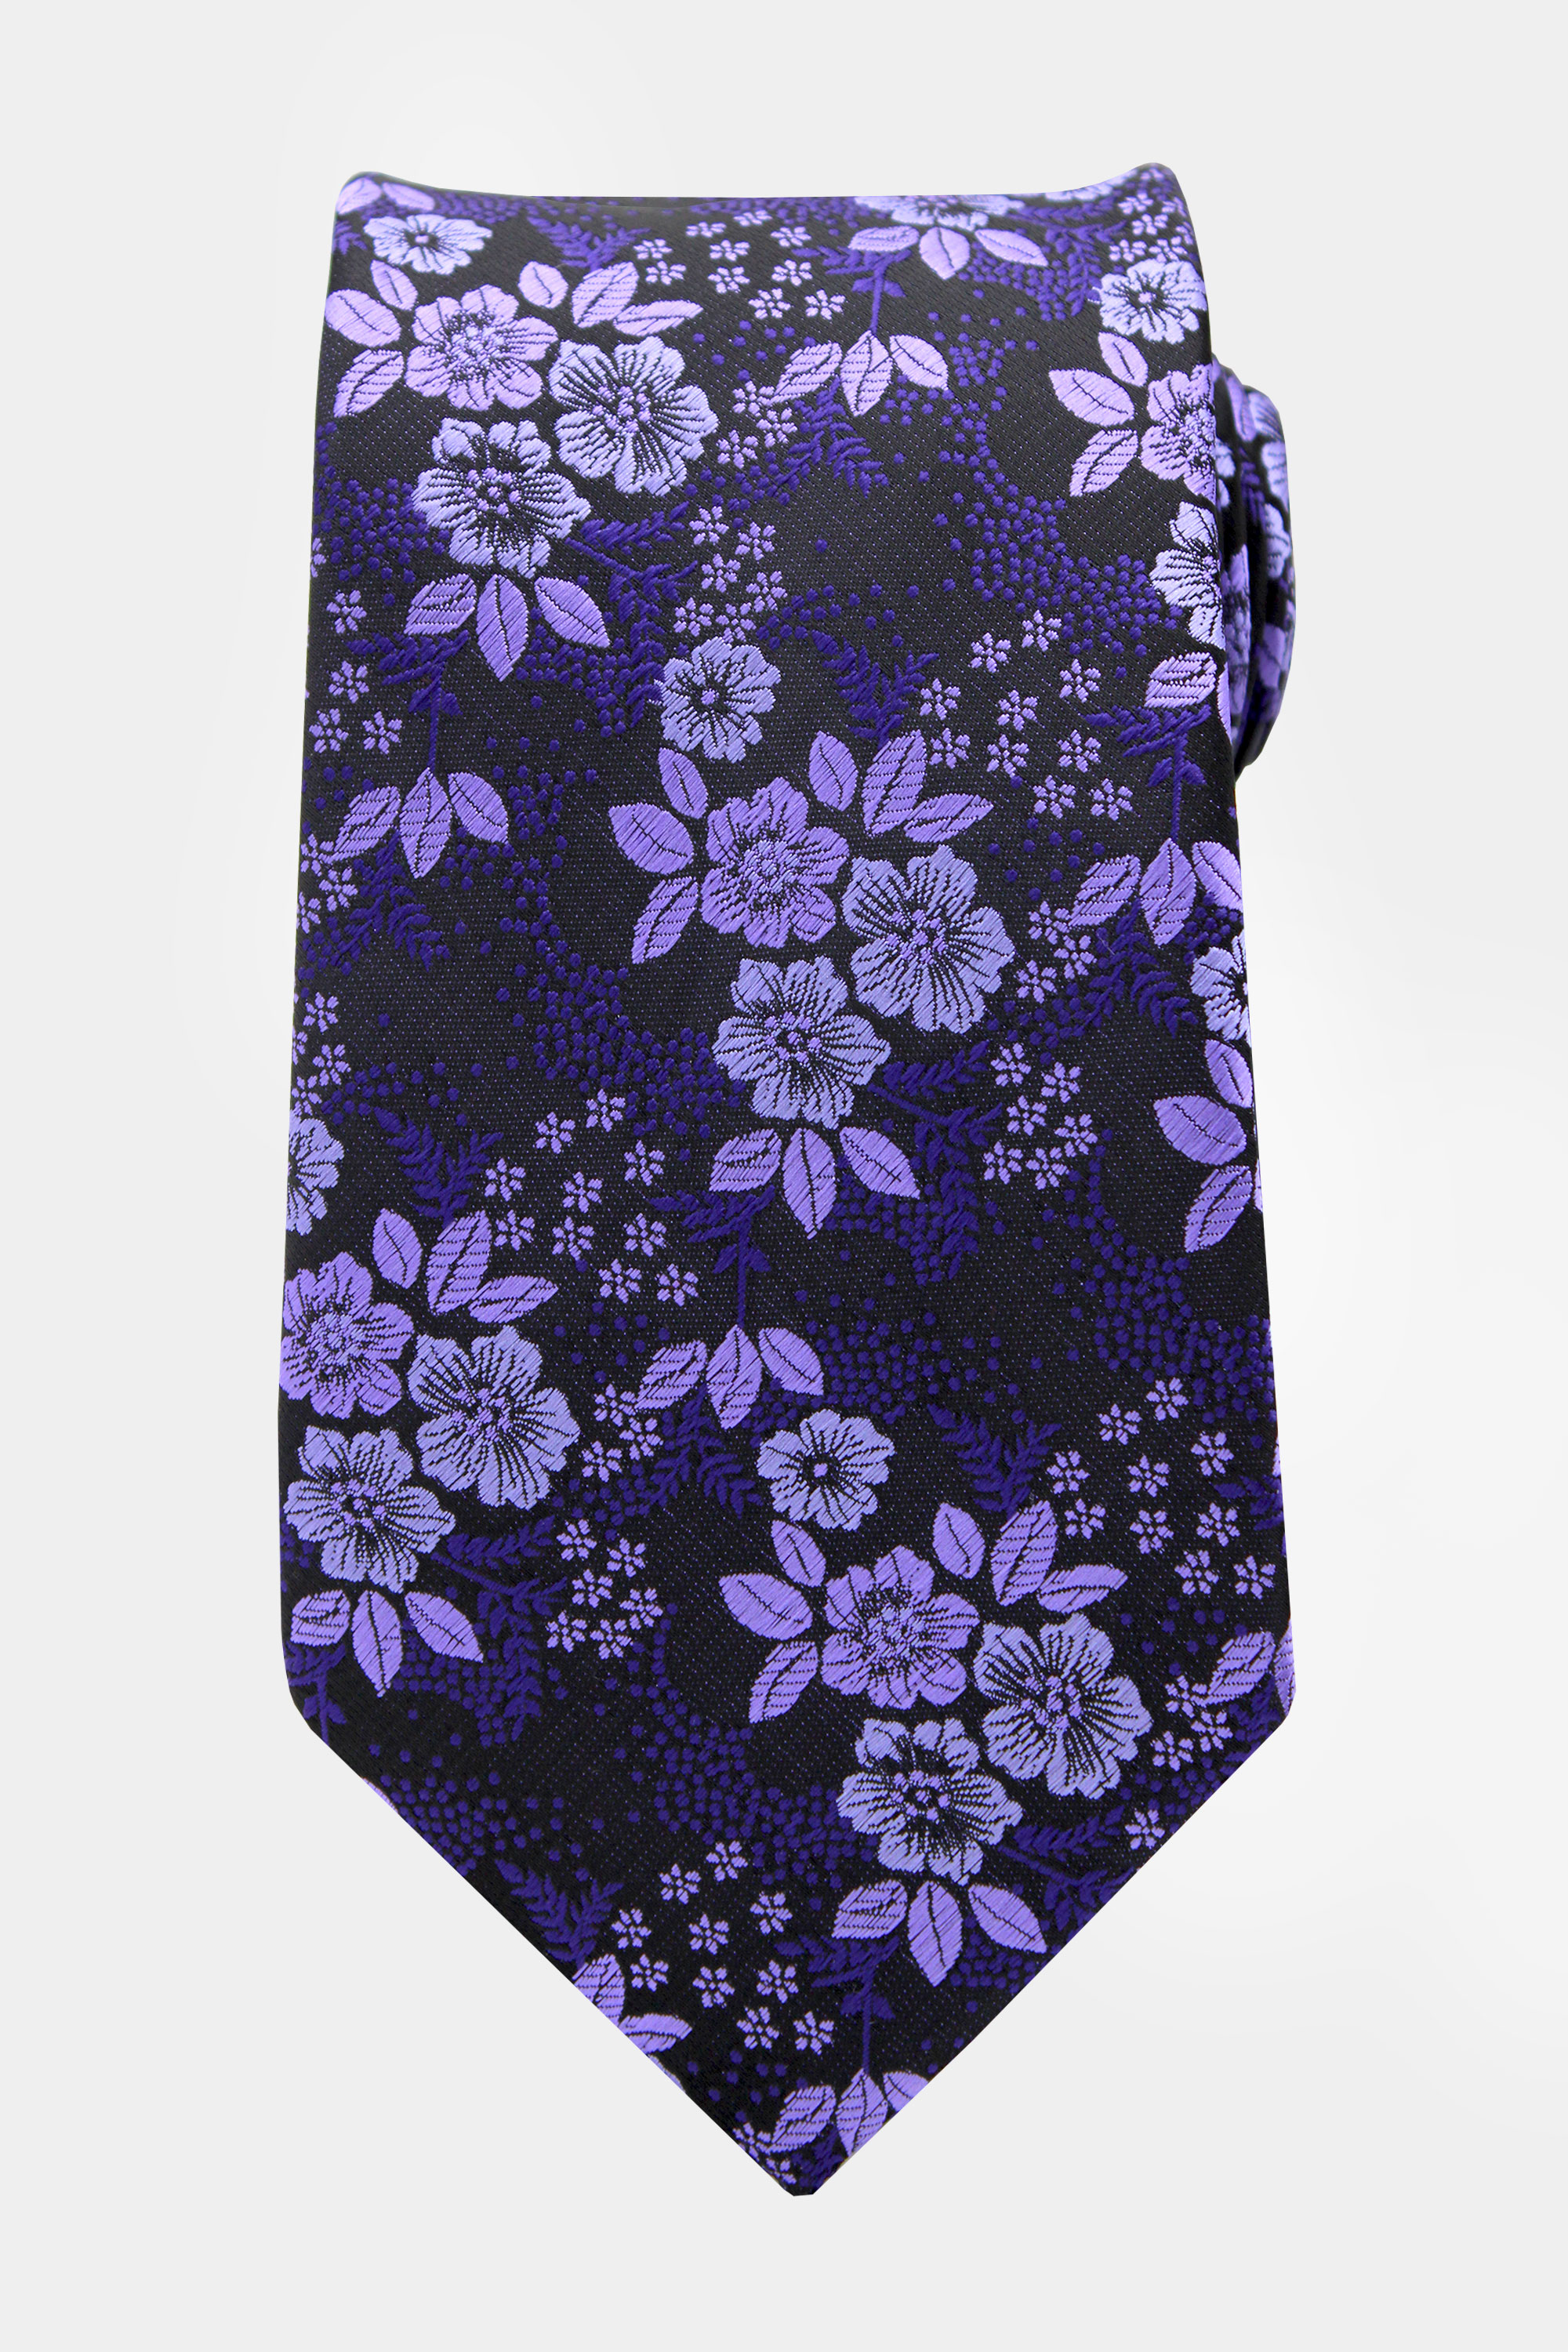 Purple-Lavender-Tie-from-Gentlemansguru.com